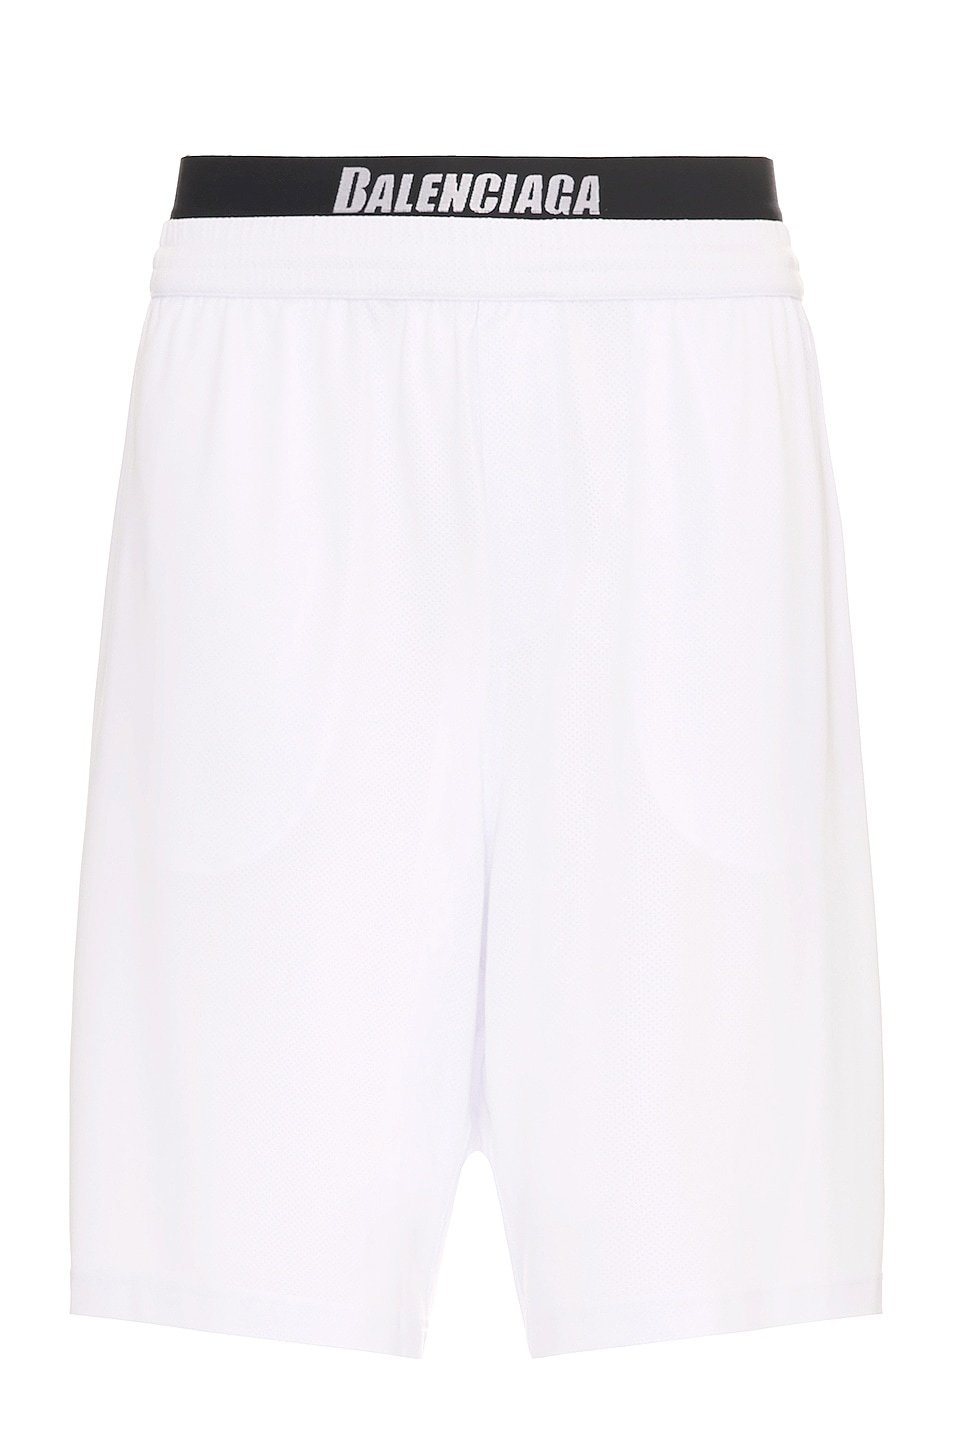 Image 1 of Balenciaga Swim Short in White